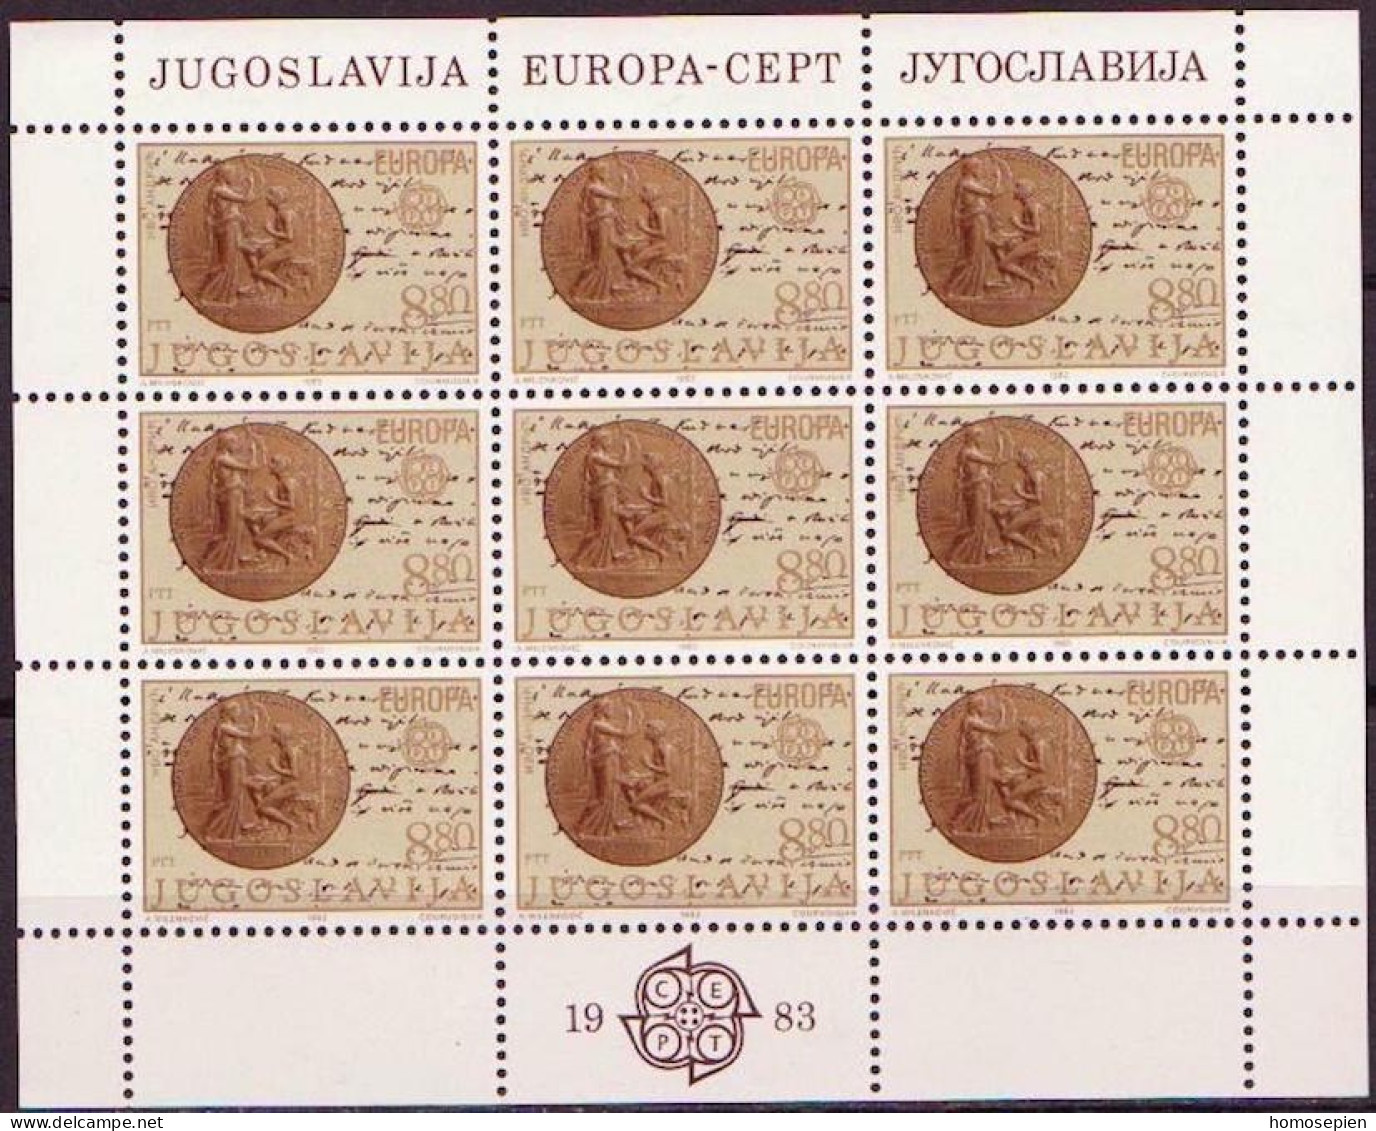 Yougoslavie - Jugoslawien - Yugoslavia Bloc Feuillet 1983 Y&T N°F1866 à F1867 - Michel N°KB1984 à KB1985 *** - EUROPA - Blocks & Sheetlets